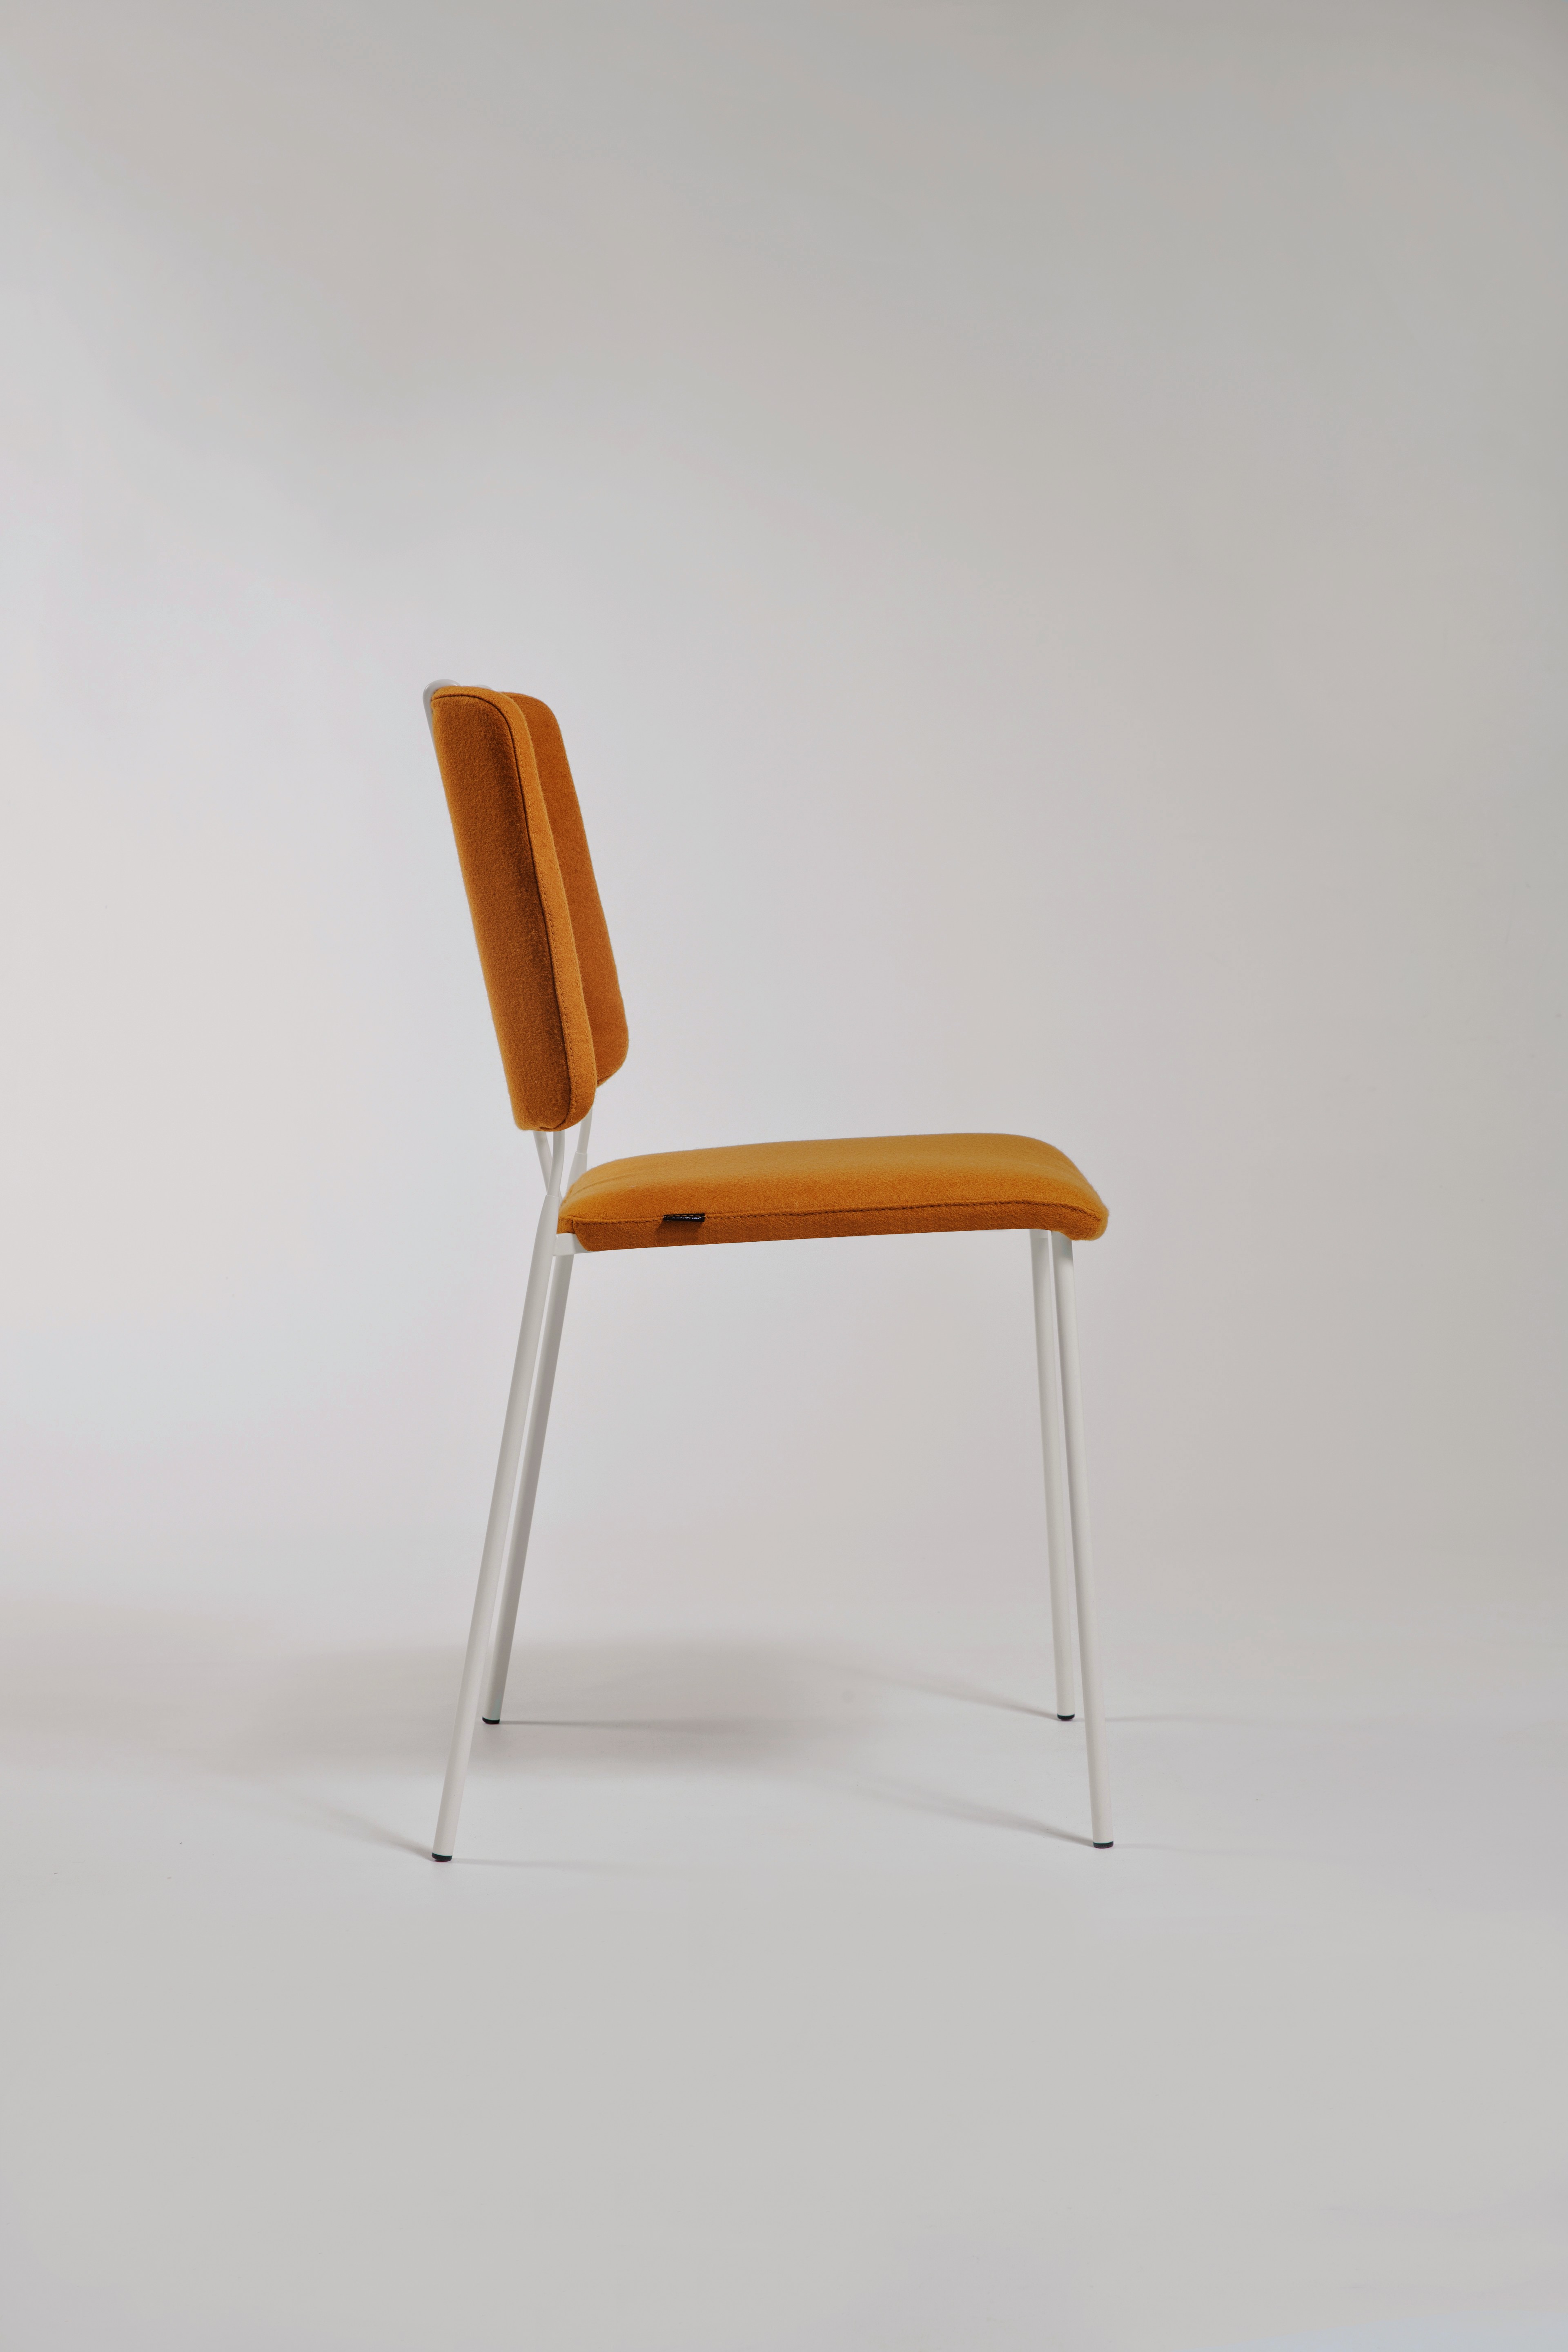 FRANKIE Chair by Färg & Blanche for Johanson Design